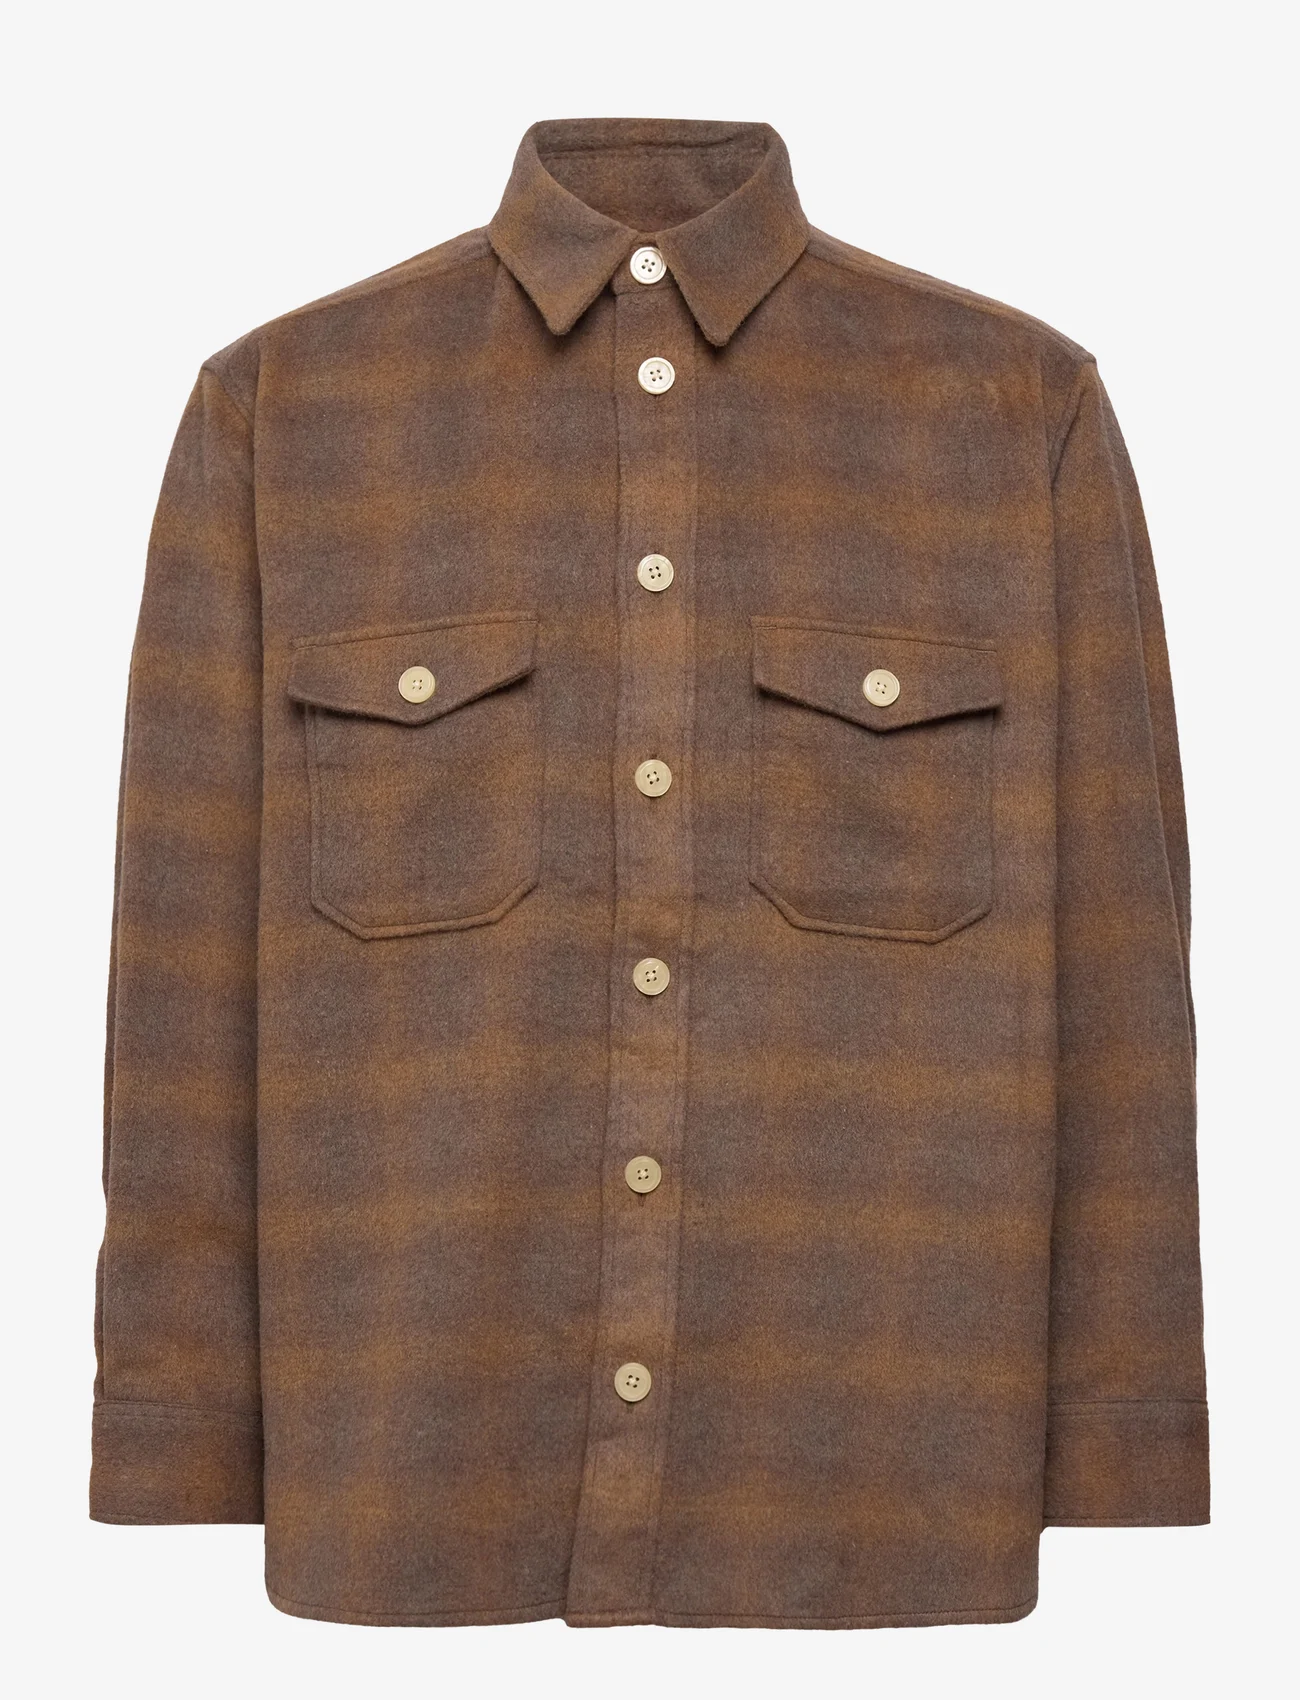 AllSaints - BARBA LS SHIRT - ternede skjorter - brown - 0